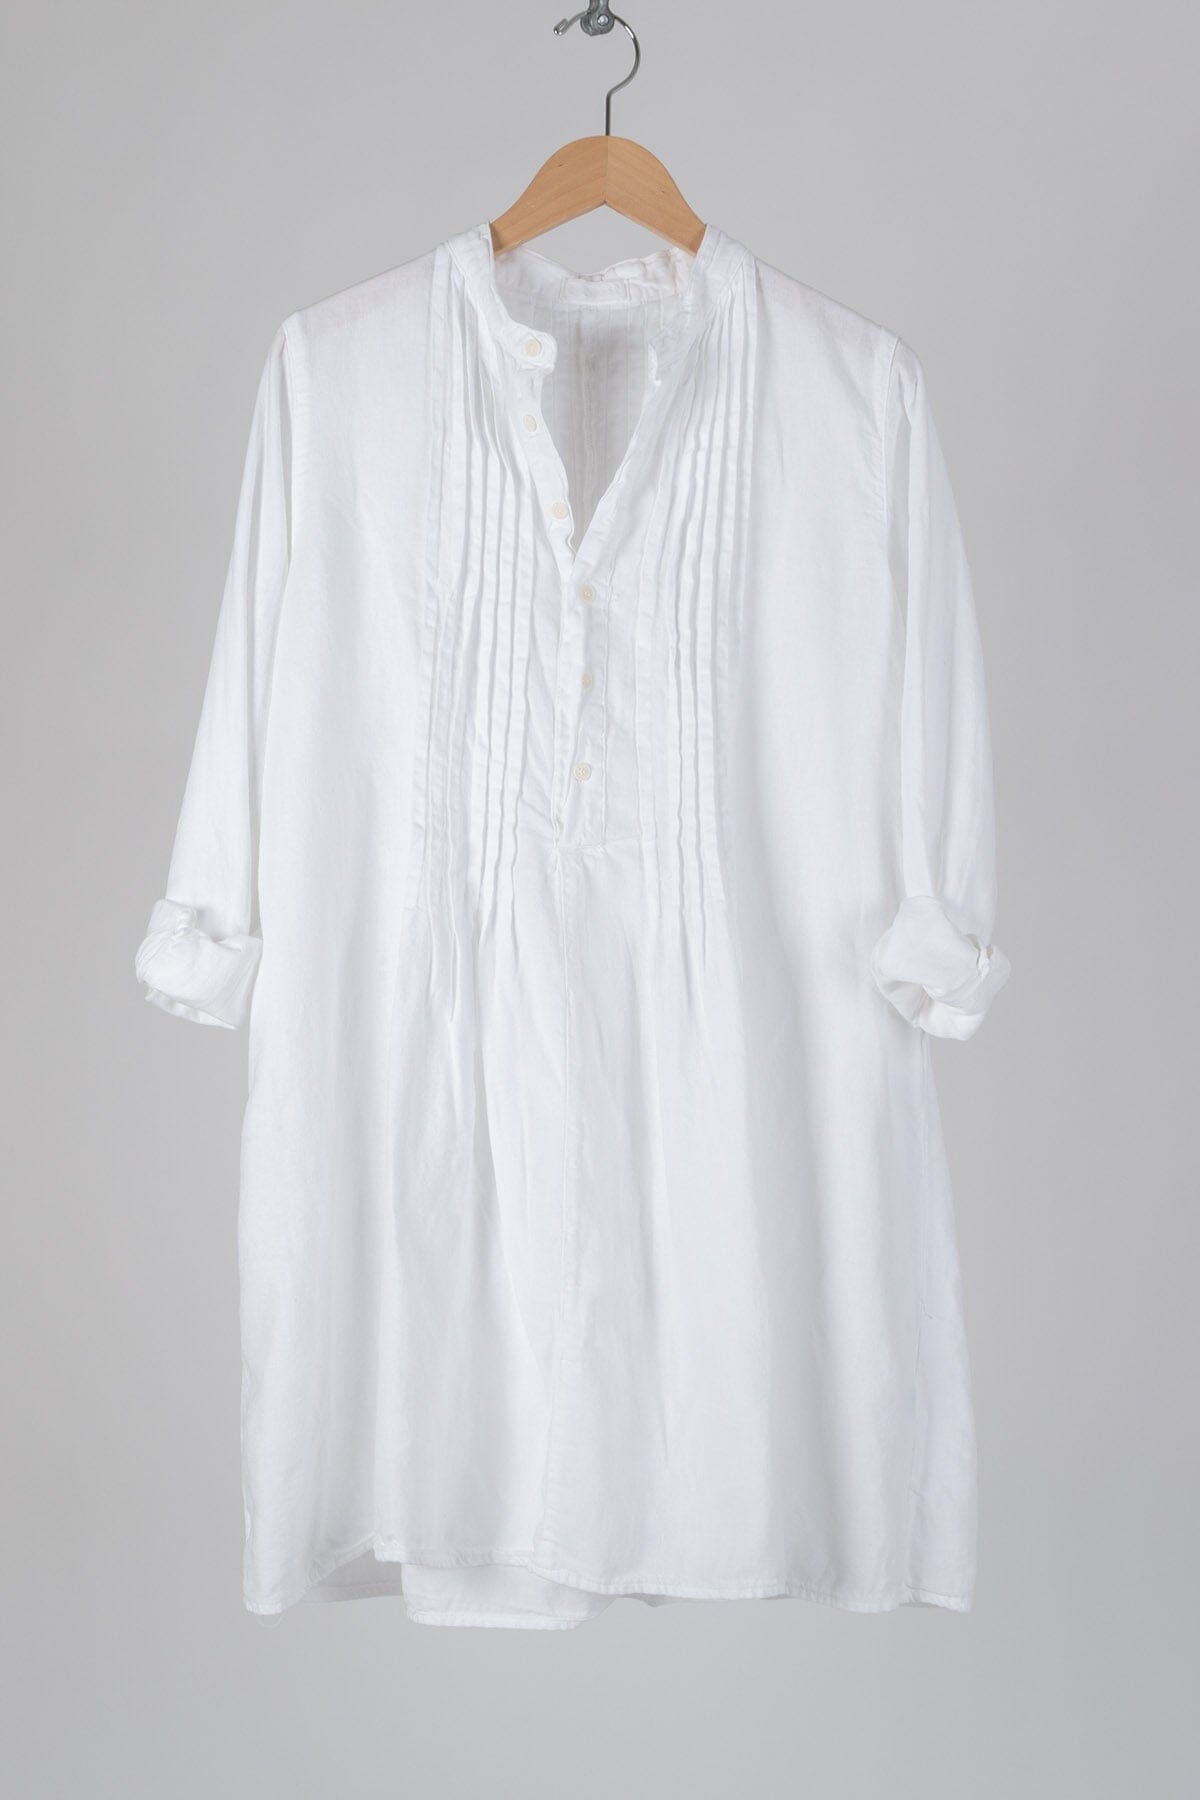 Yoko - Textured Cotton S90 - 4269 Sale CP Shades white 4269